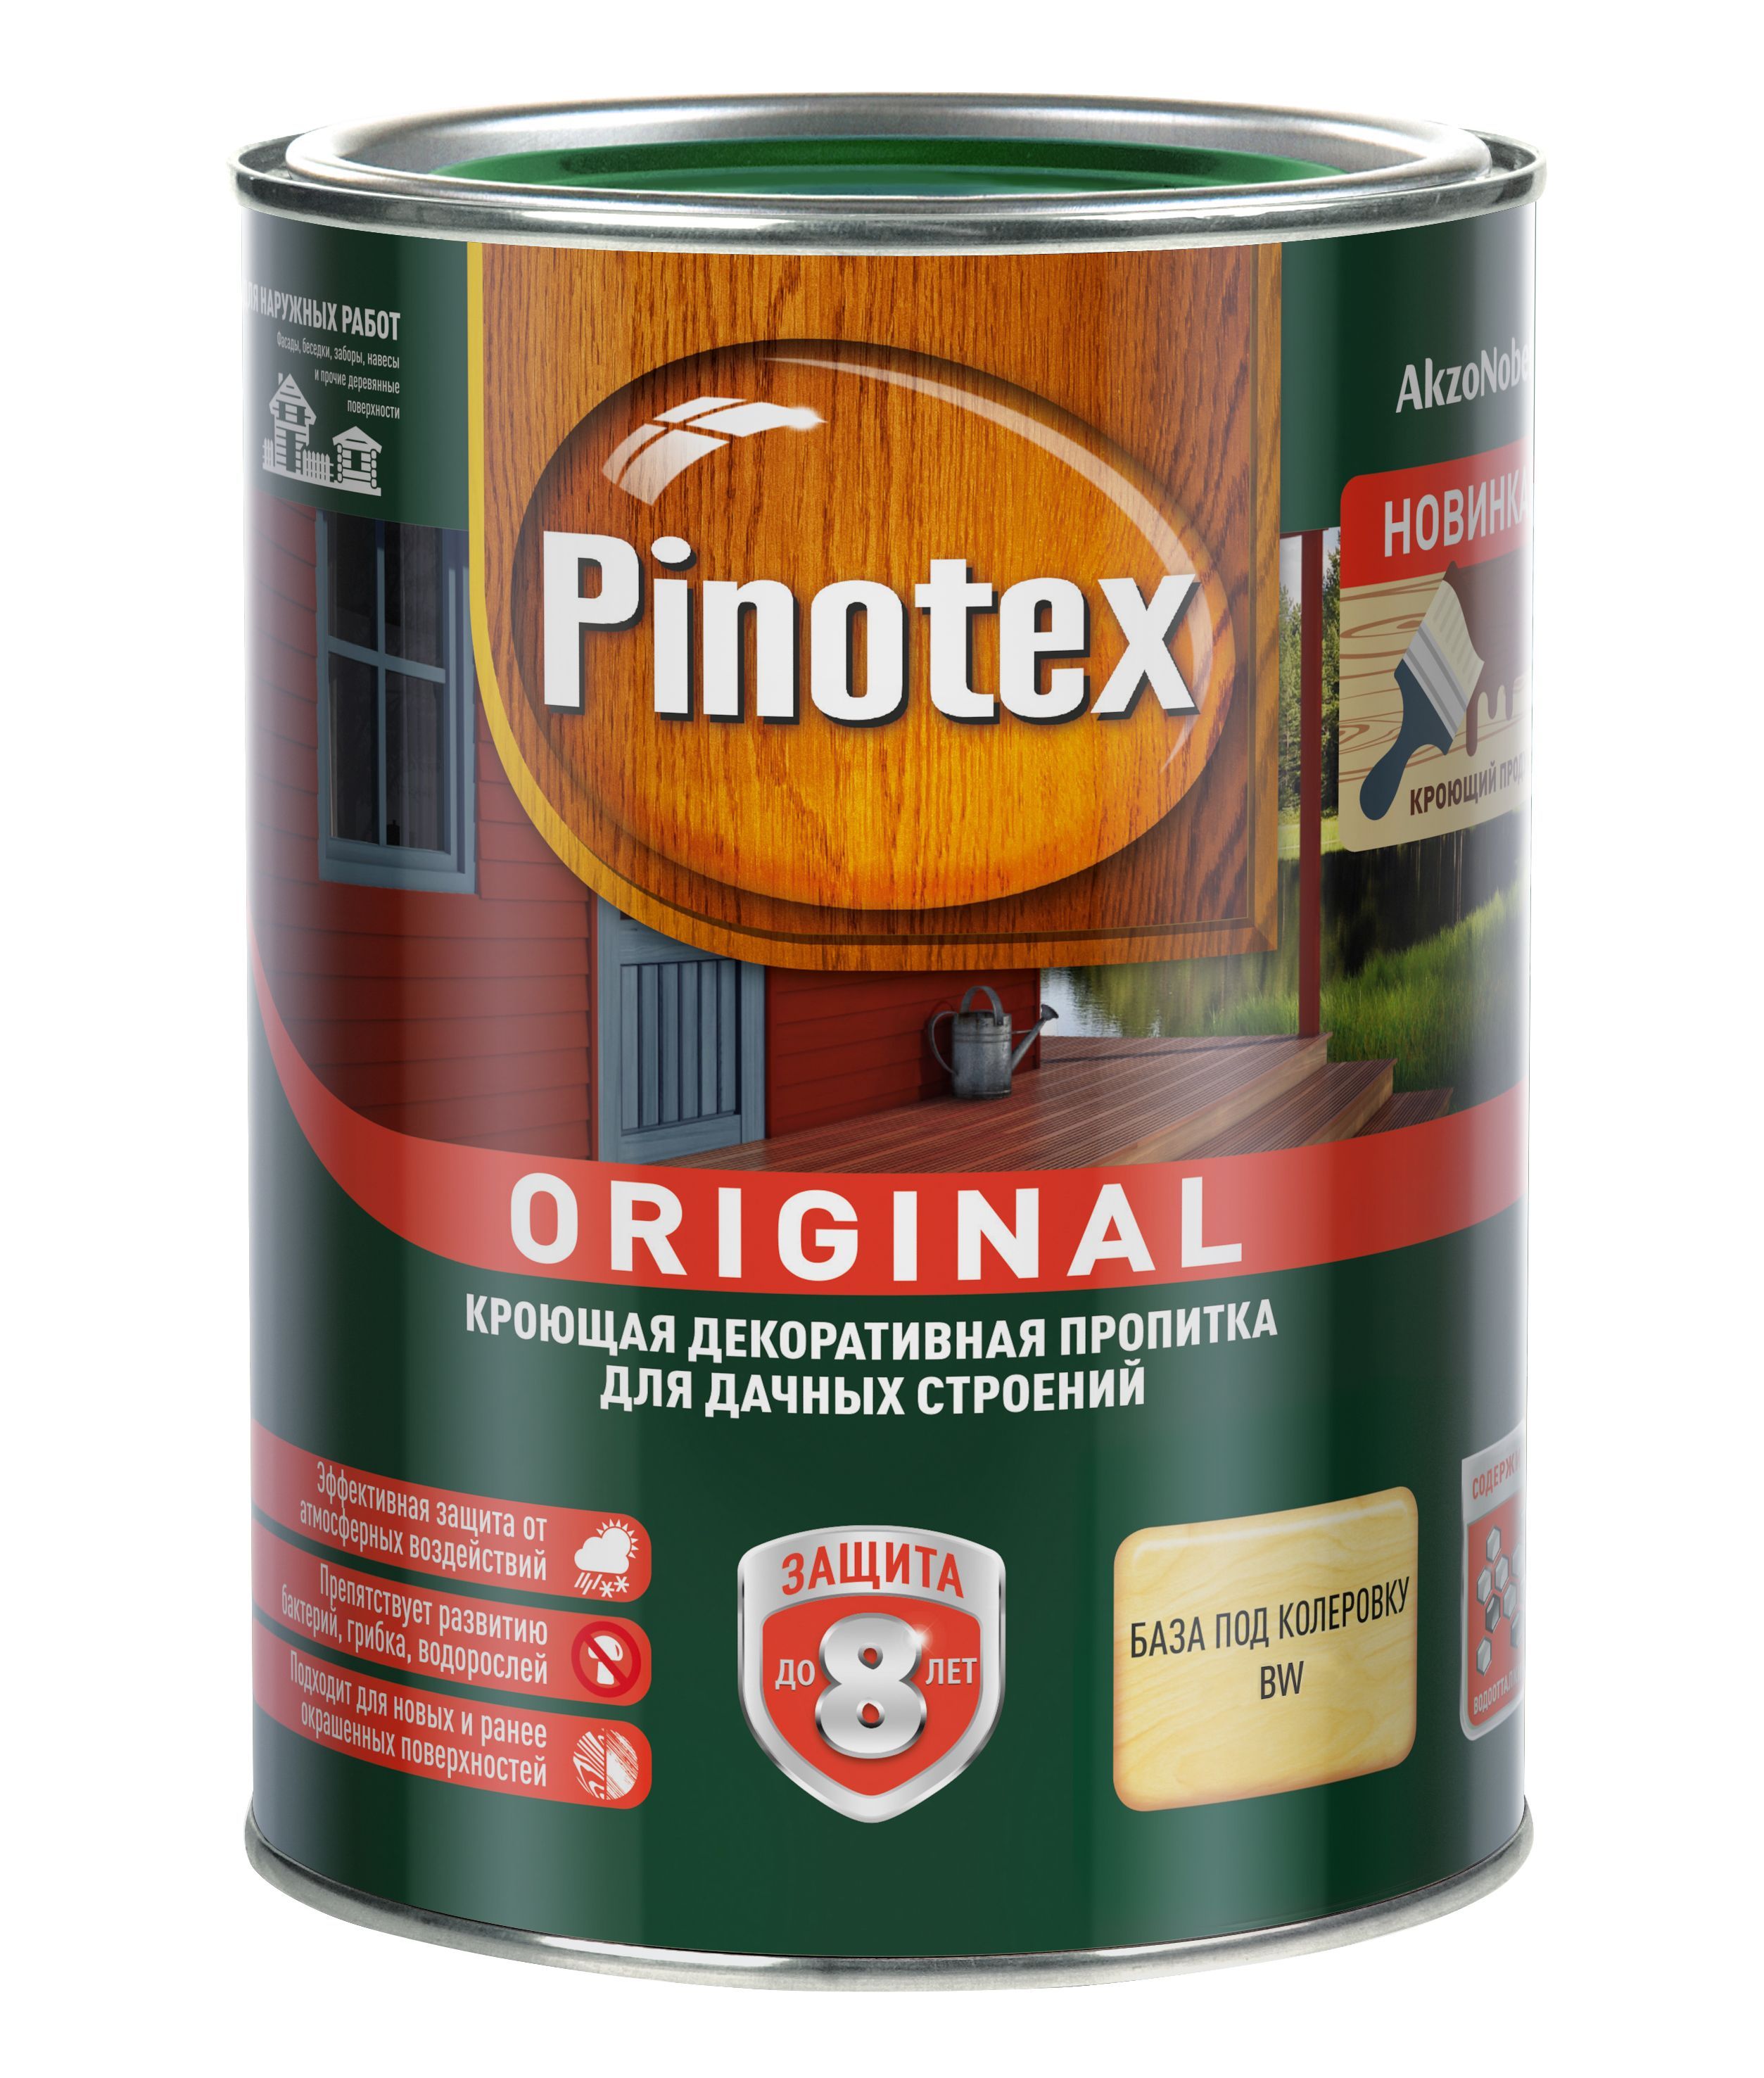 Масло для дерева дуб. Пропитка Pinotex Classic светлый дуб. Пинотекс ультра тик. Pinotex Ultra, калужница, 9 л. Pinotex Focus Aqua.